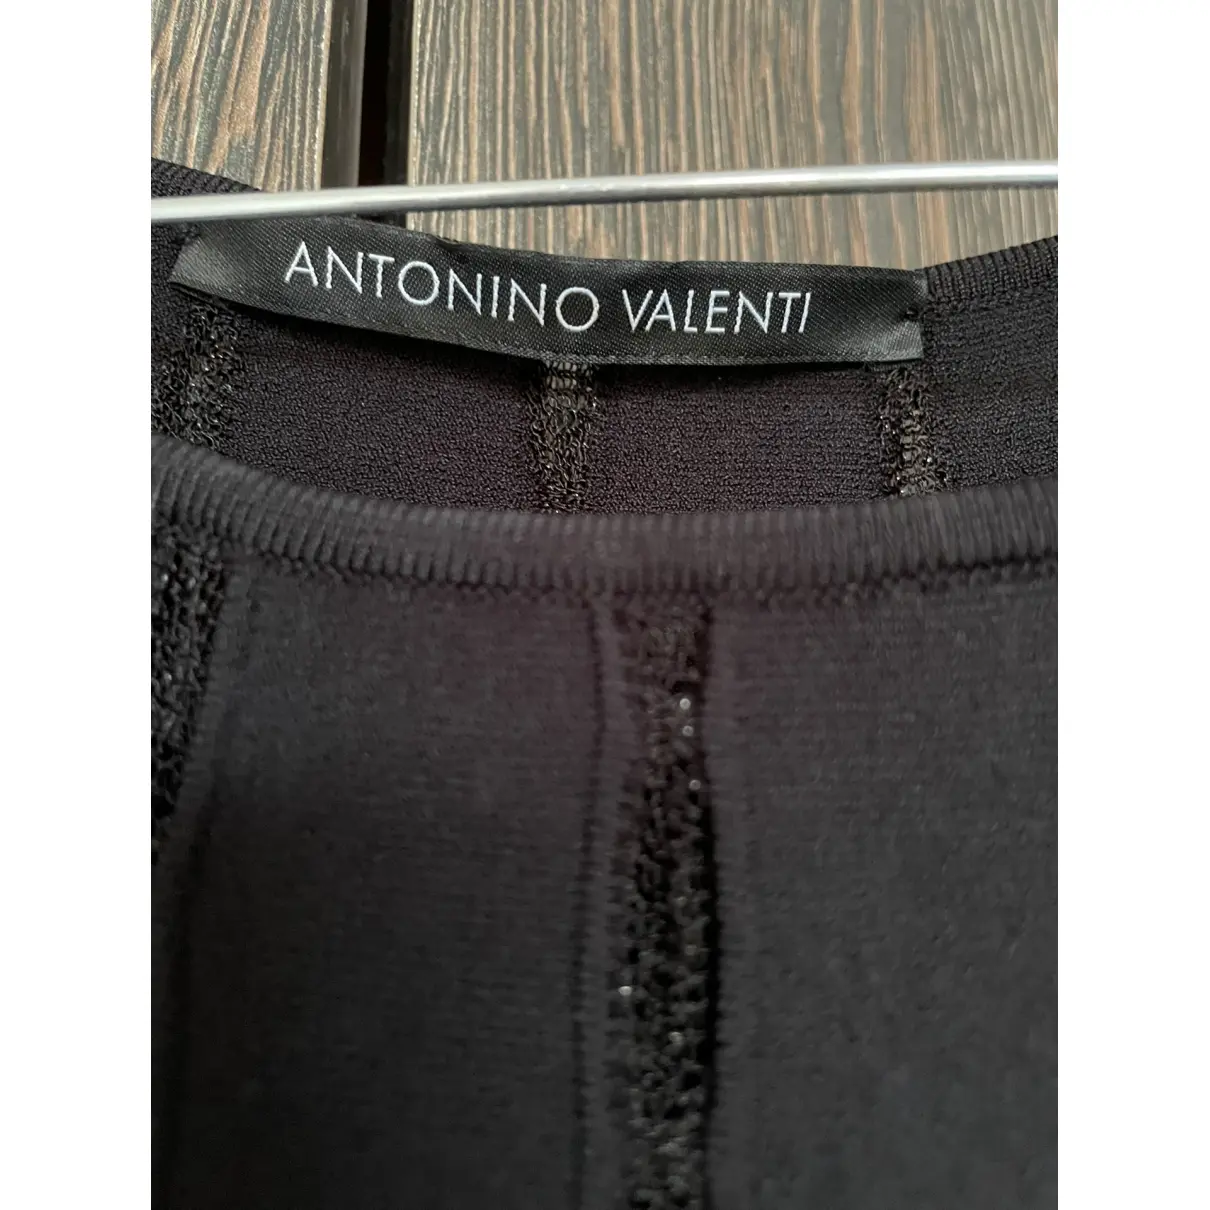 Buy Antonino Valenti Mini dress online